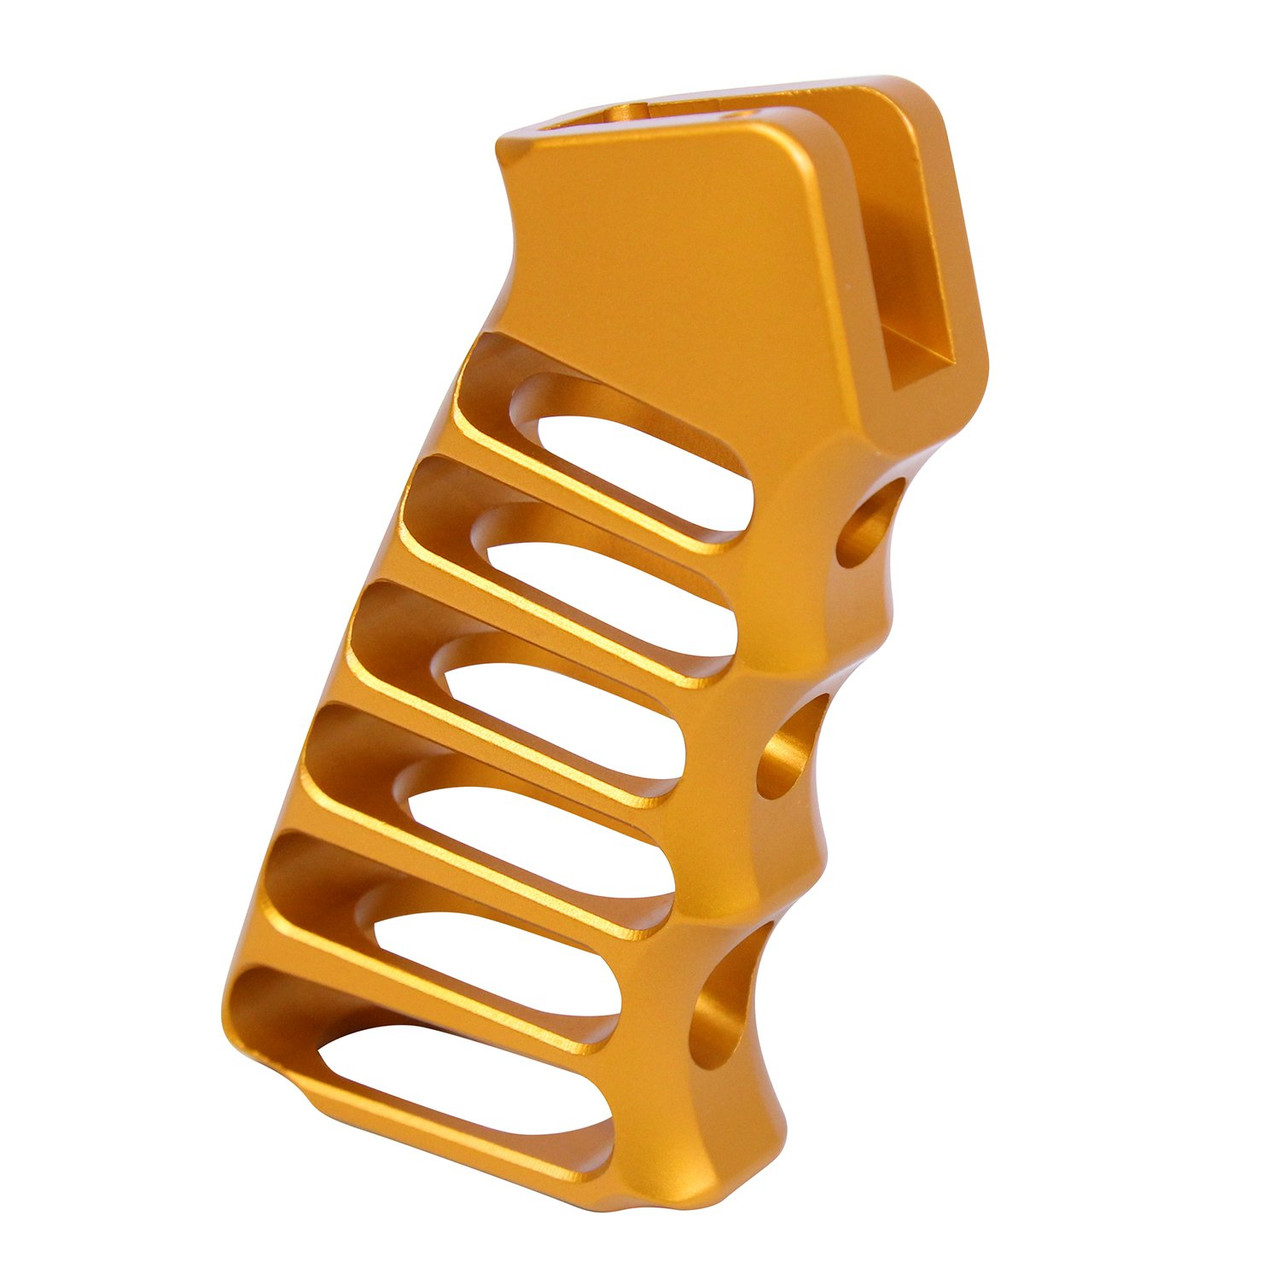 Guntec USA ULS-PG-ORANGE Ultralight Series Skeletonized Aluminum Pistol Grip (Anodized Orange)